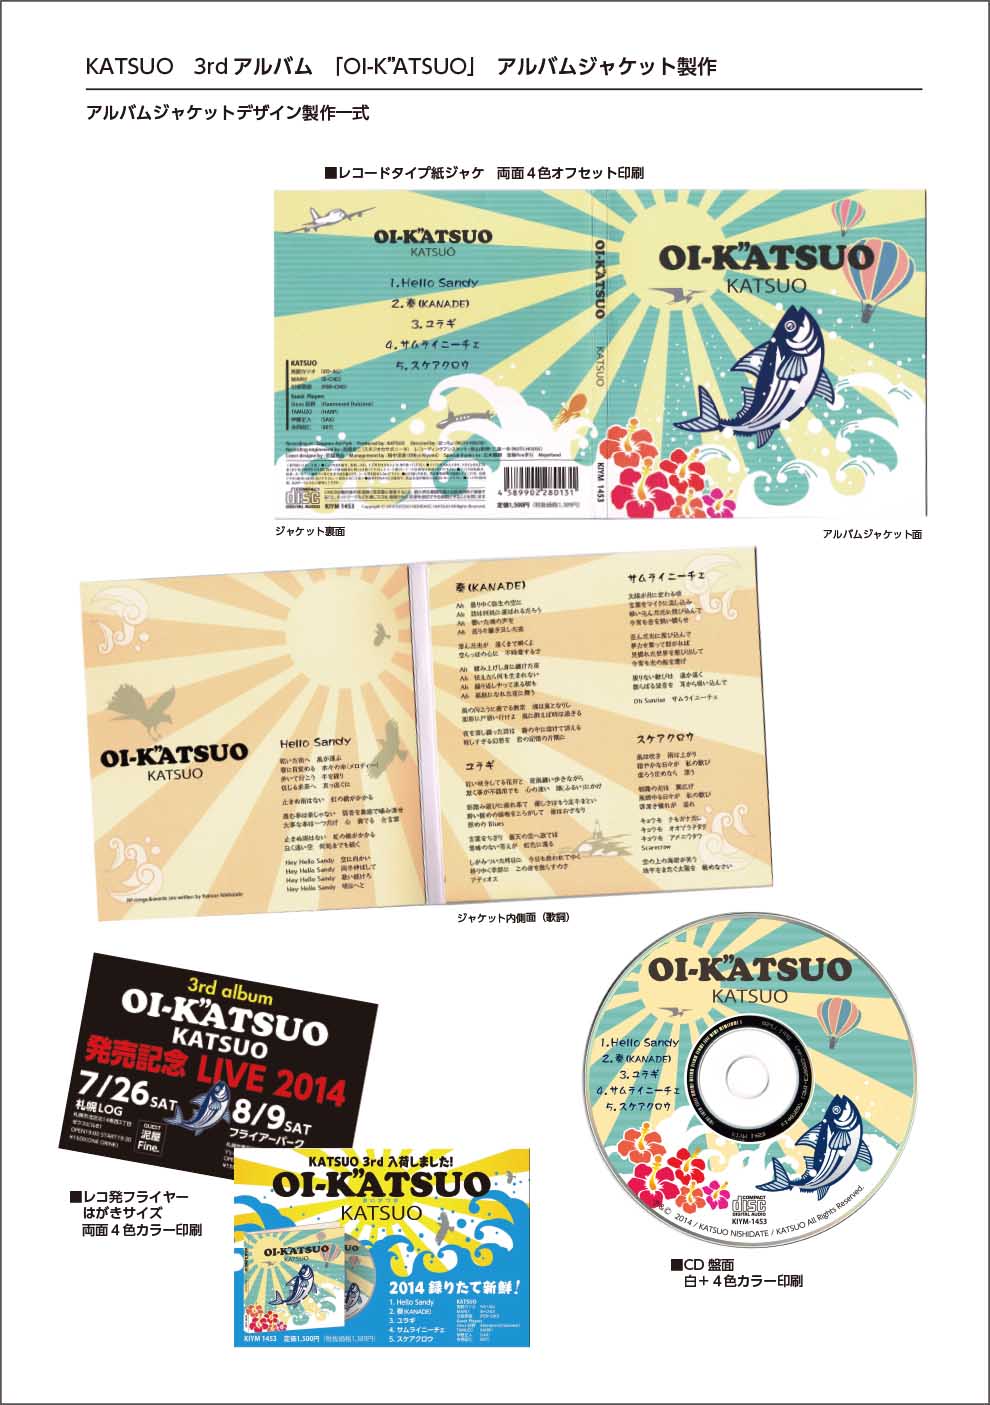 alt="影猫商会,katsuo、cd-artworks"